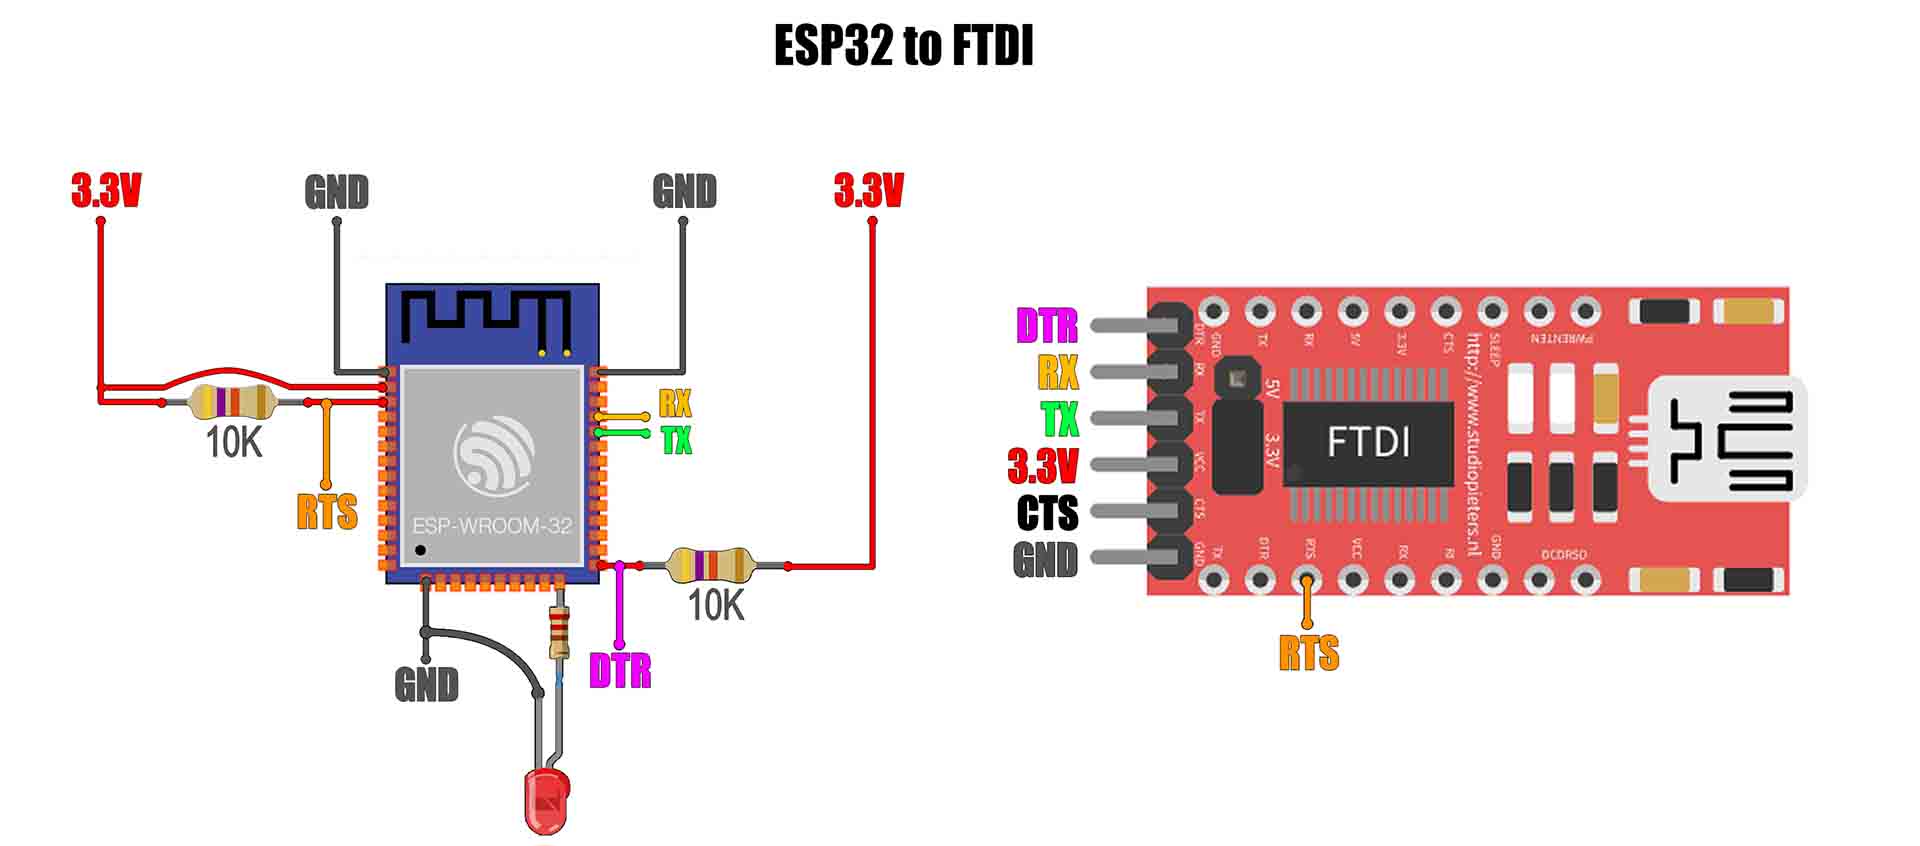 ESP32 bare minimum schematic FTDI programming